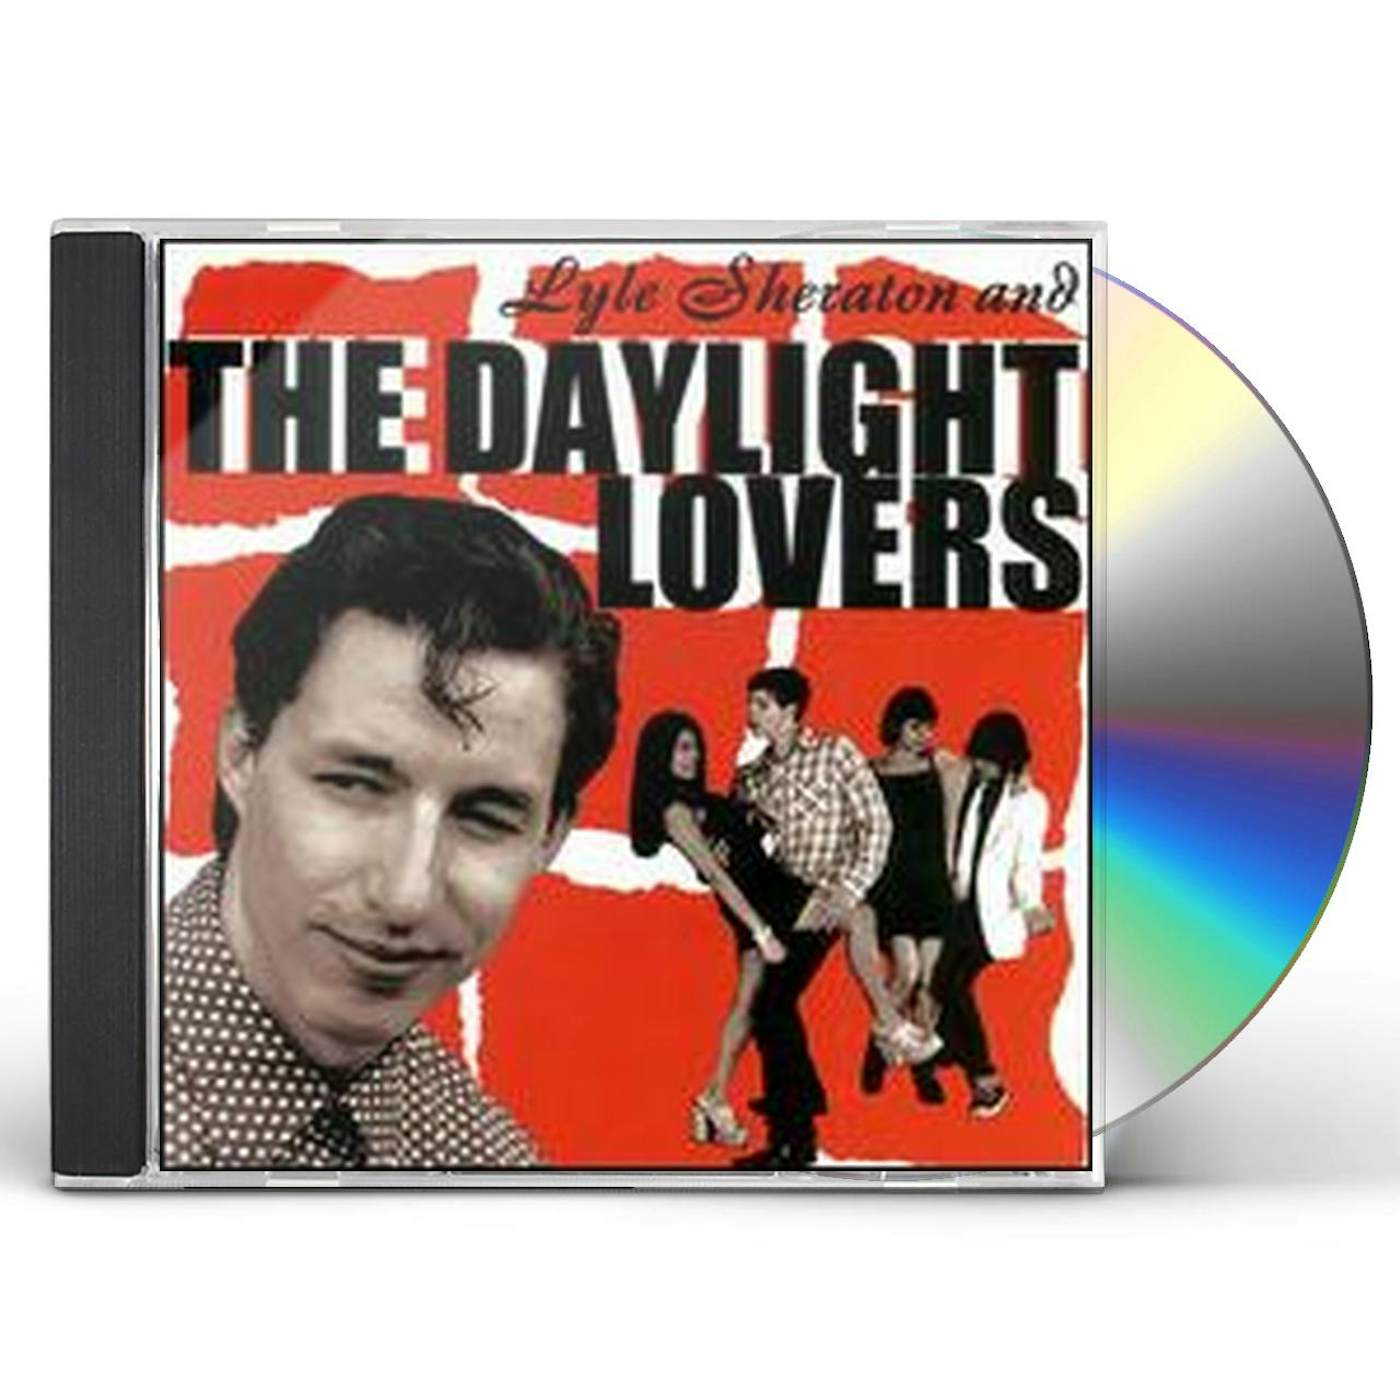 LYLE SHERATON & THE DAYLIGHT LOVERS CD